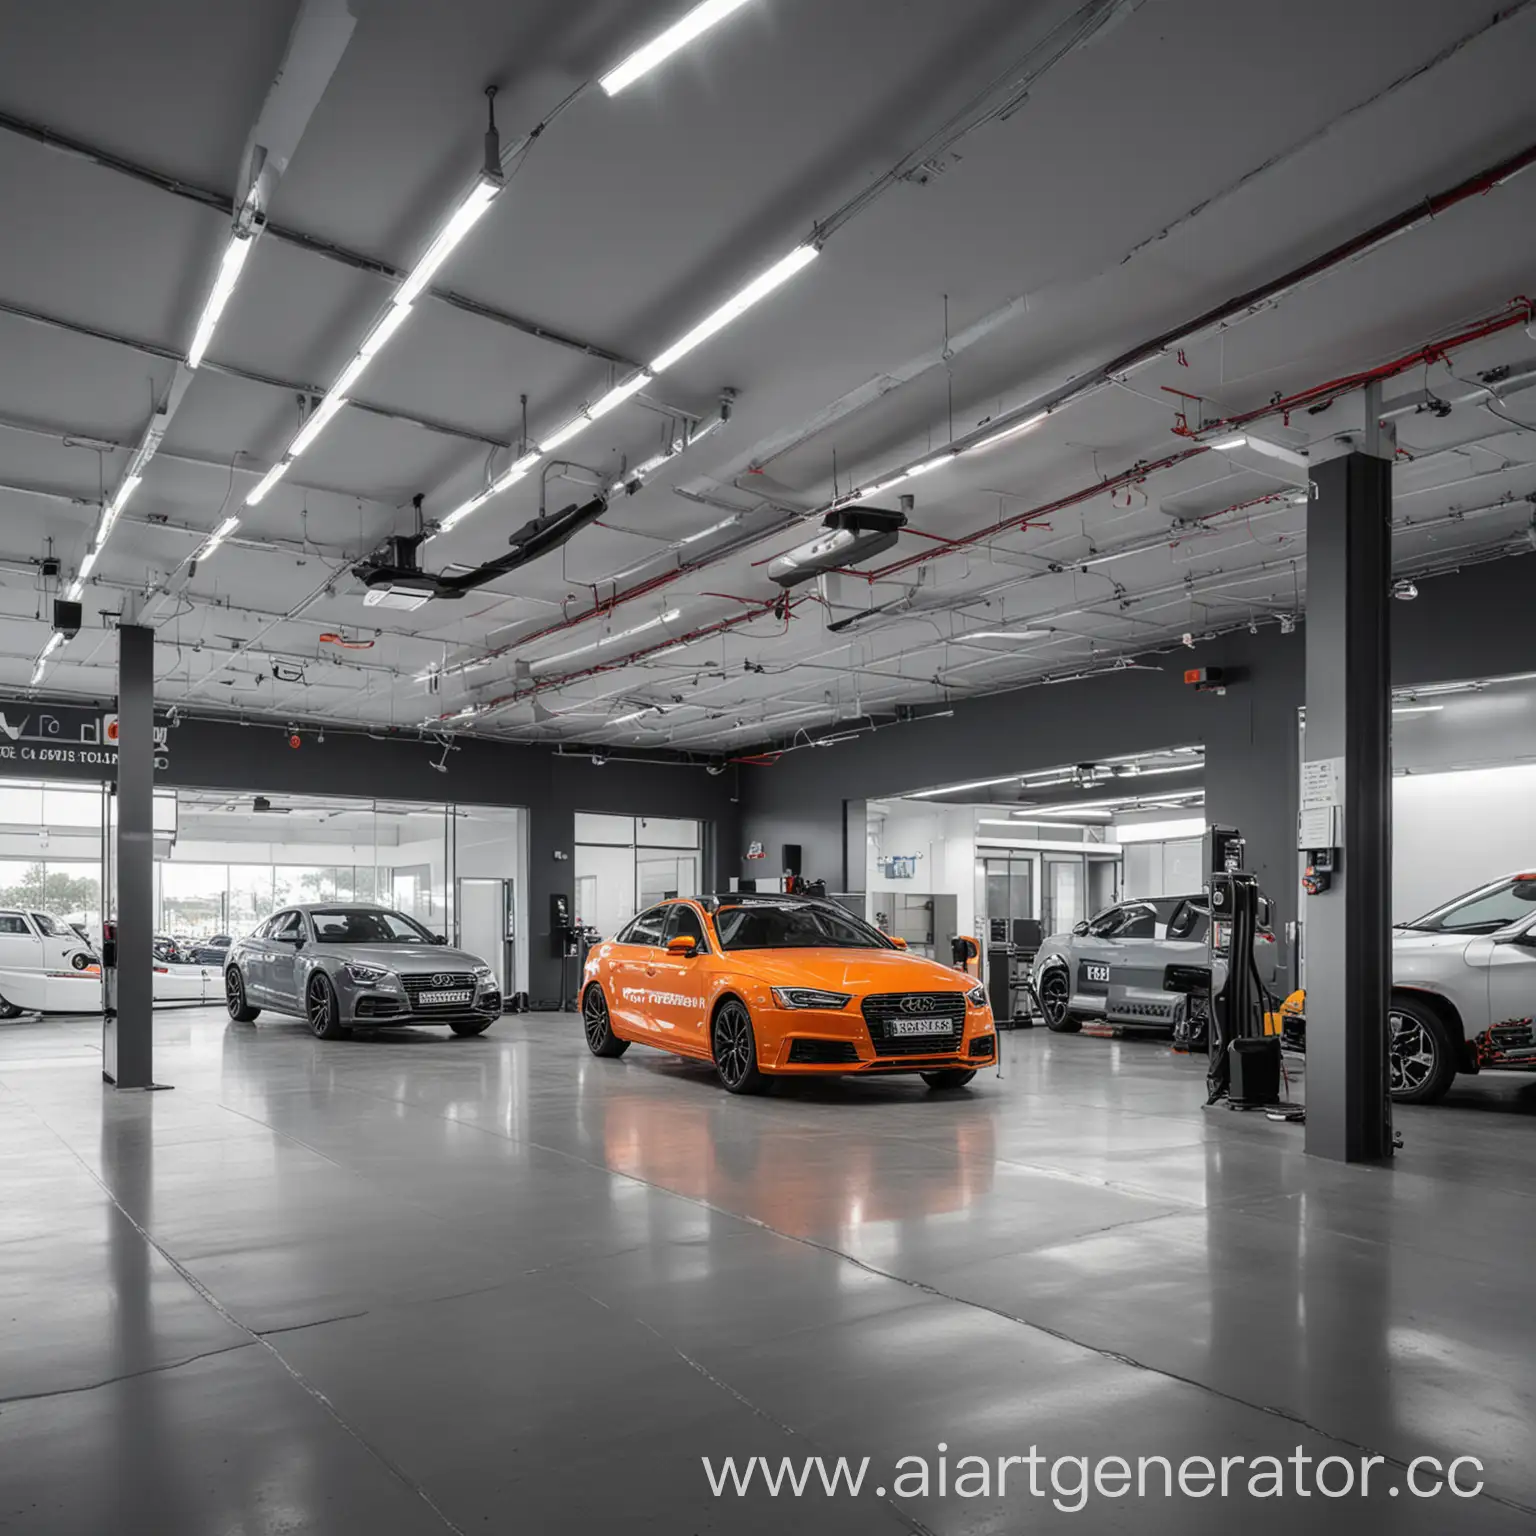 Modern-Auto-Service-Inside-the-Car-Lab